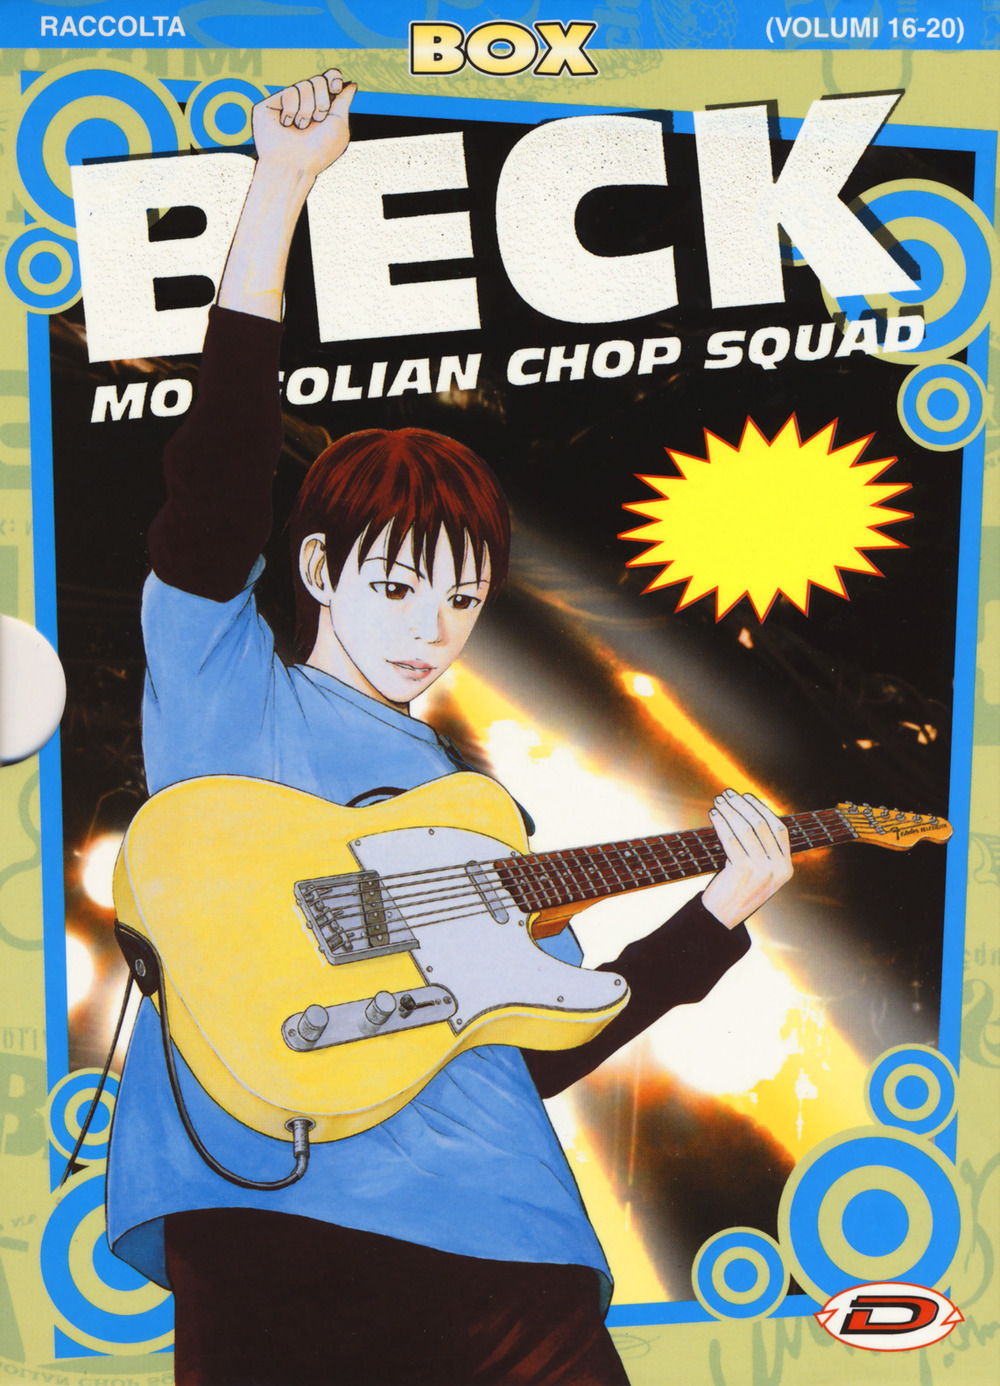 Beck. Mongolian chop squad. Box. Vol. 16-20